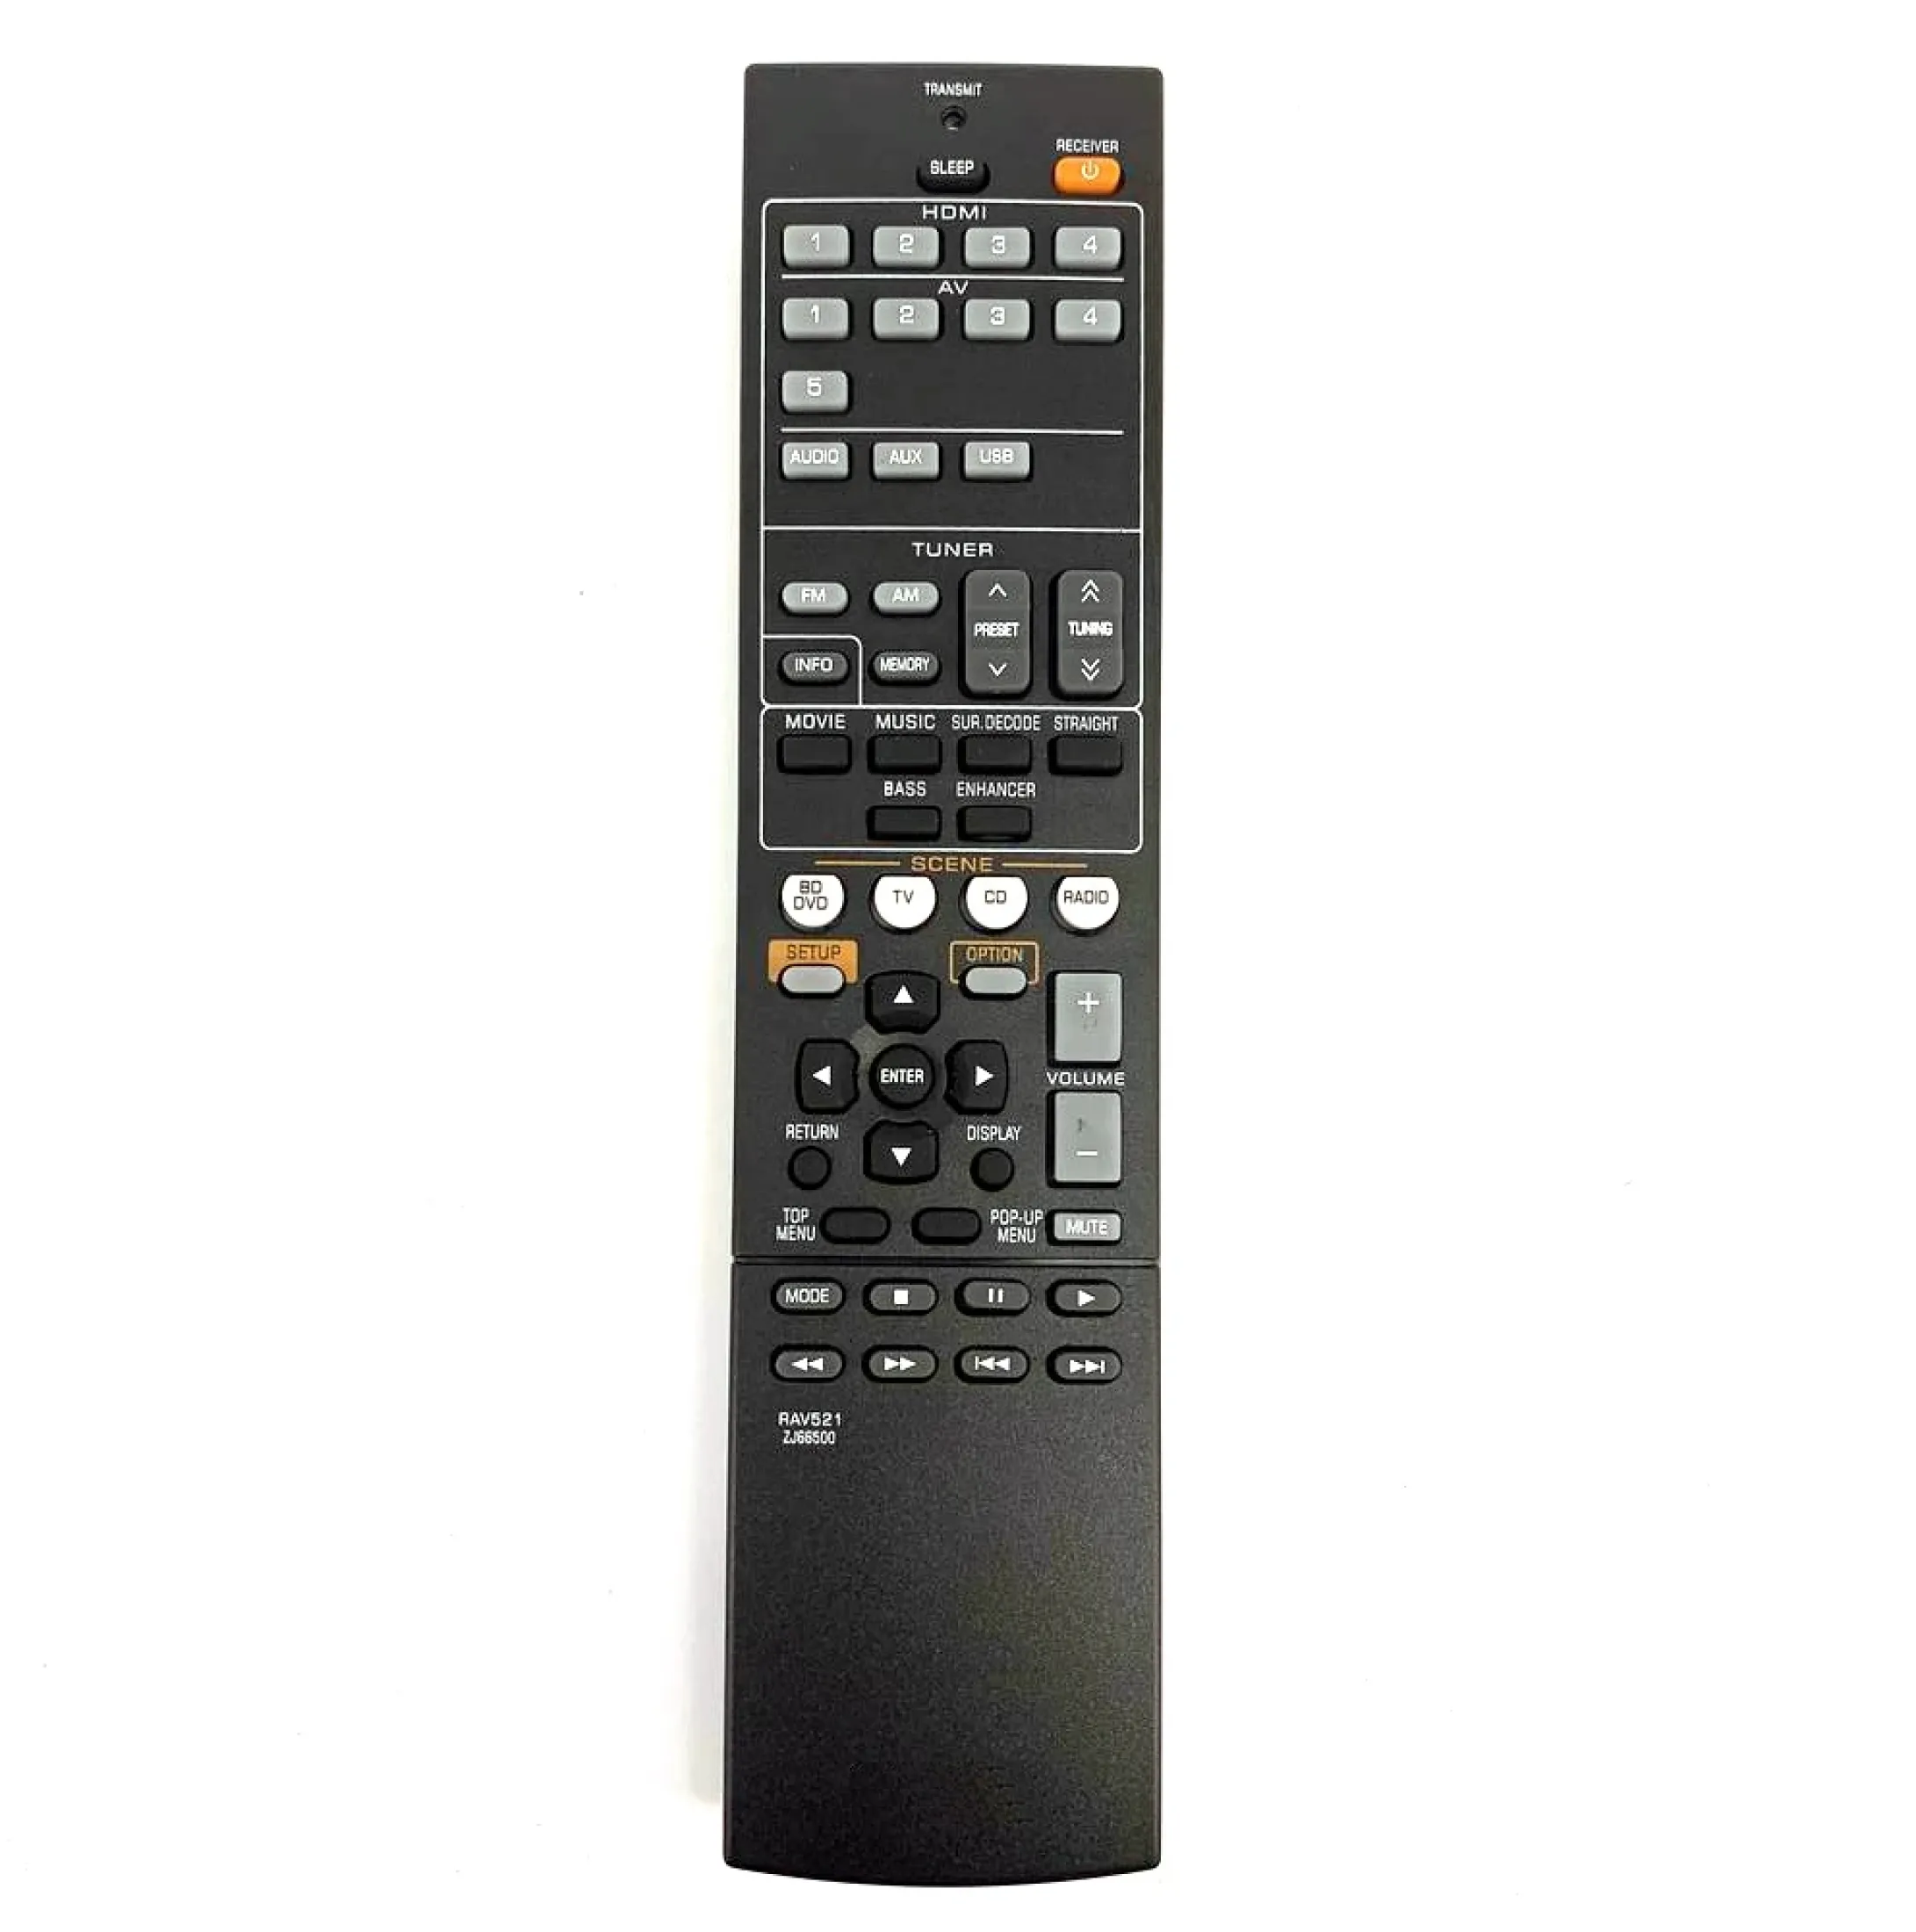 New-Remote-Control-RAV521-ZJ66500-For-YAMAHA-AV-BD-DVD-Radio-CD-TV-Audio-Video-Receiver.jpg_Q90.jpg_.webp.jpg